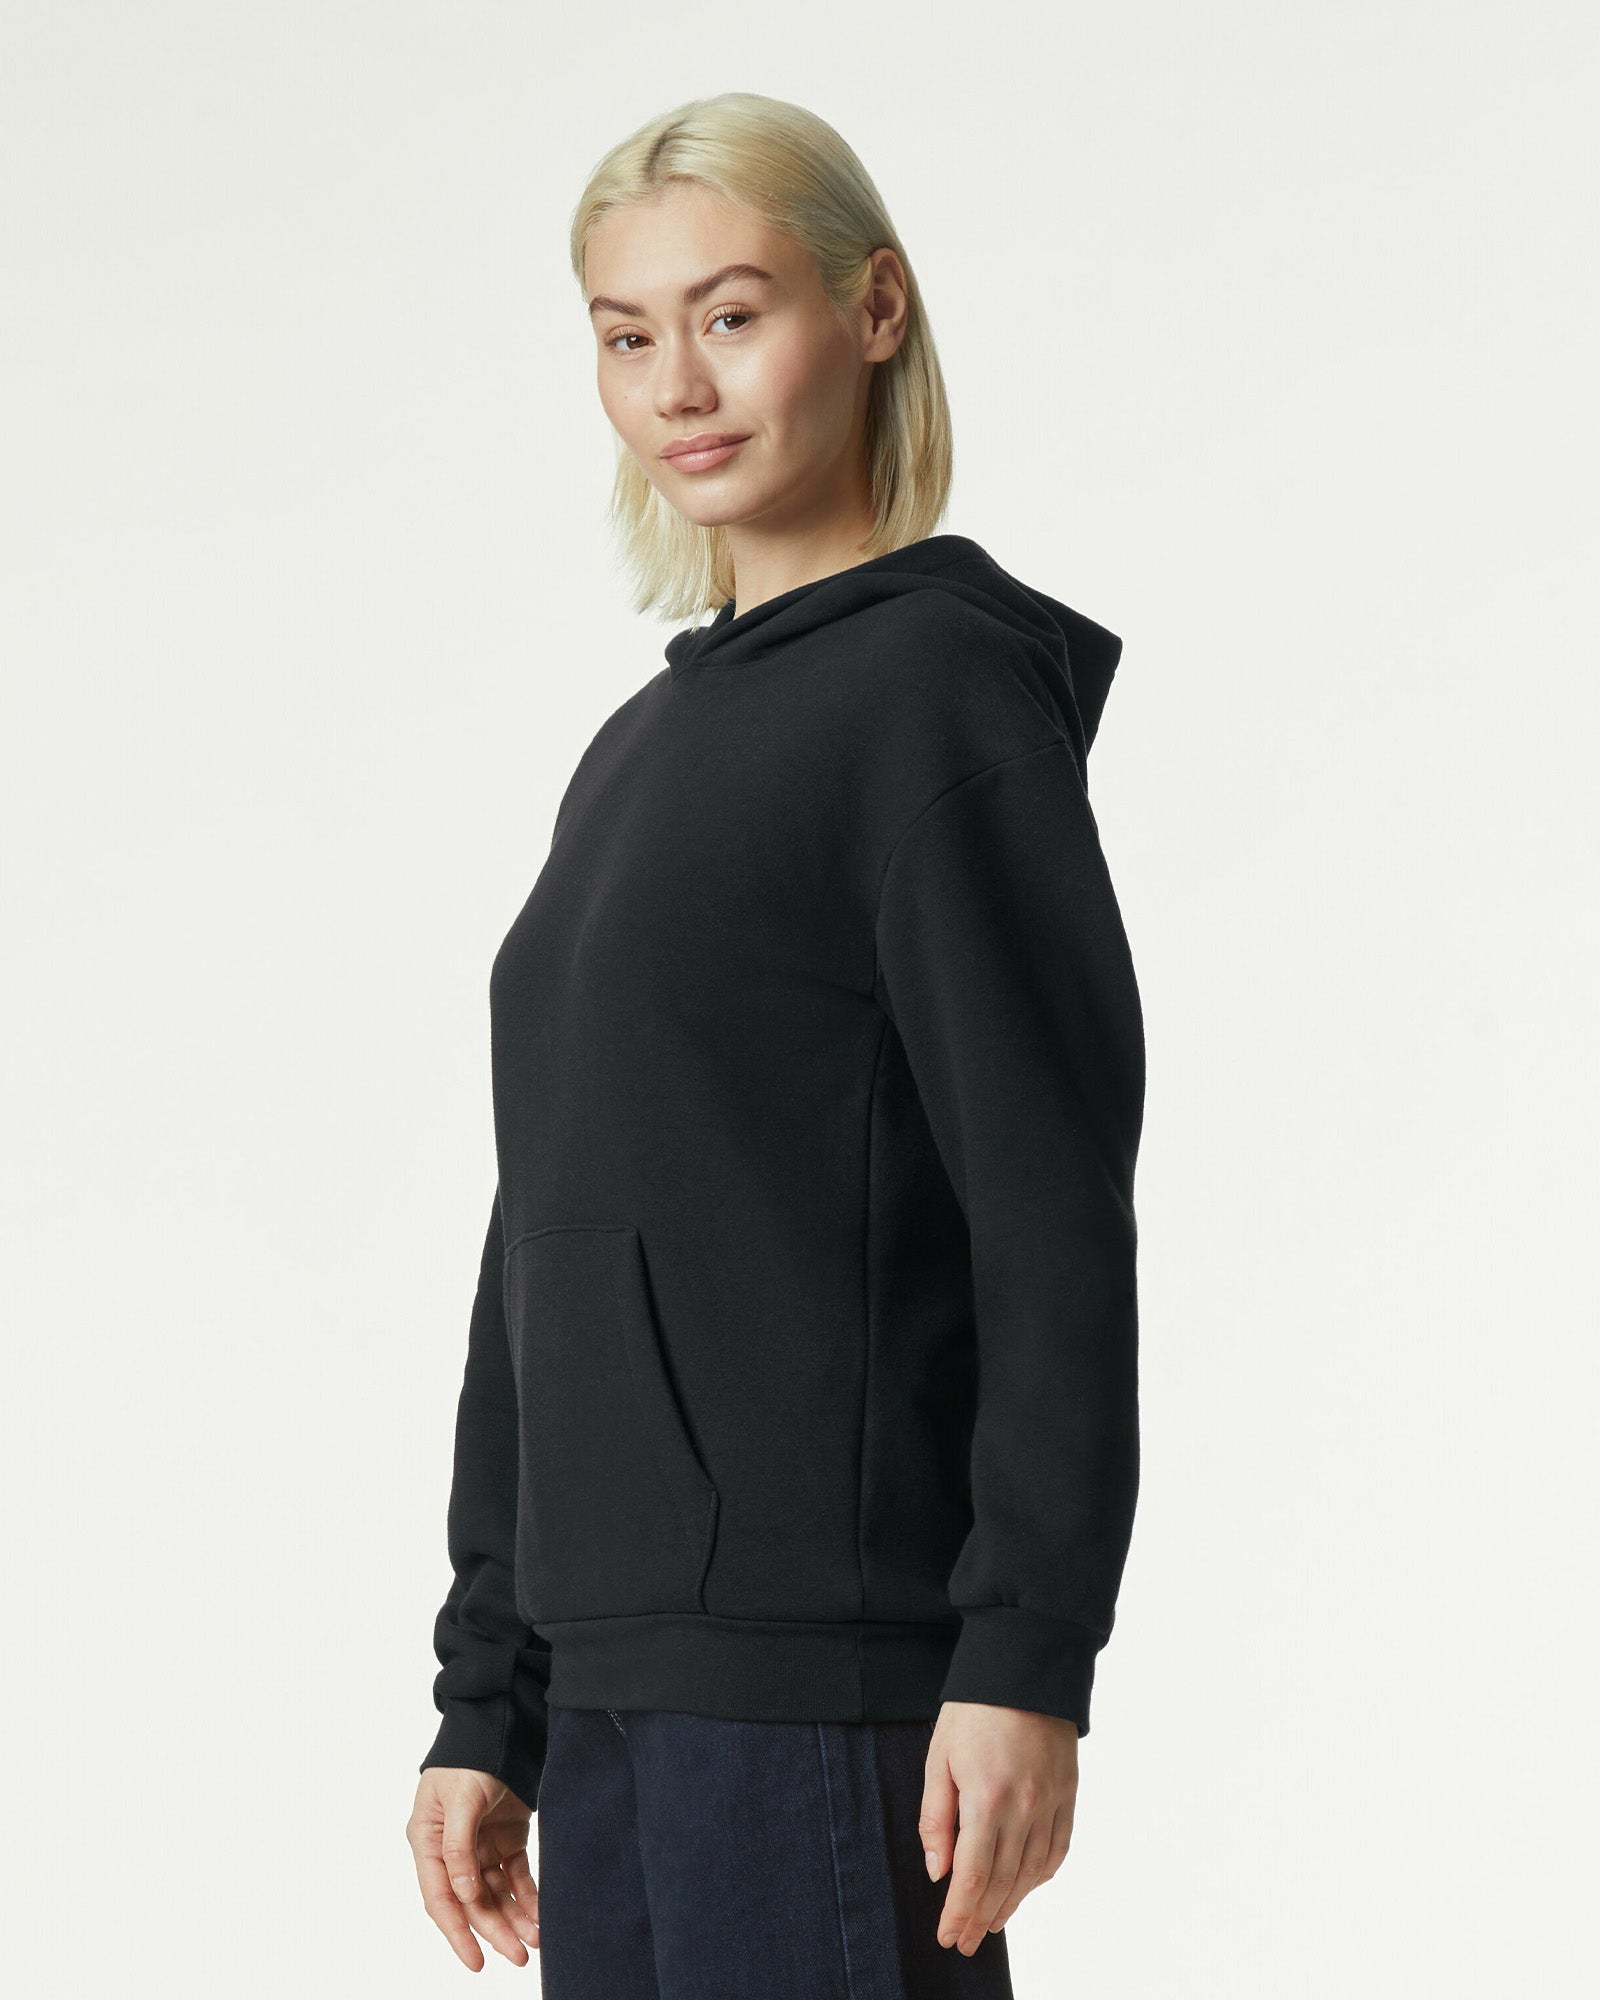 Reflex Unisex Hooded Sweatshirt - Black